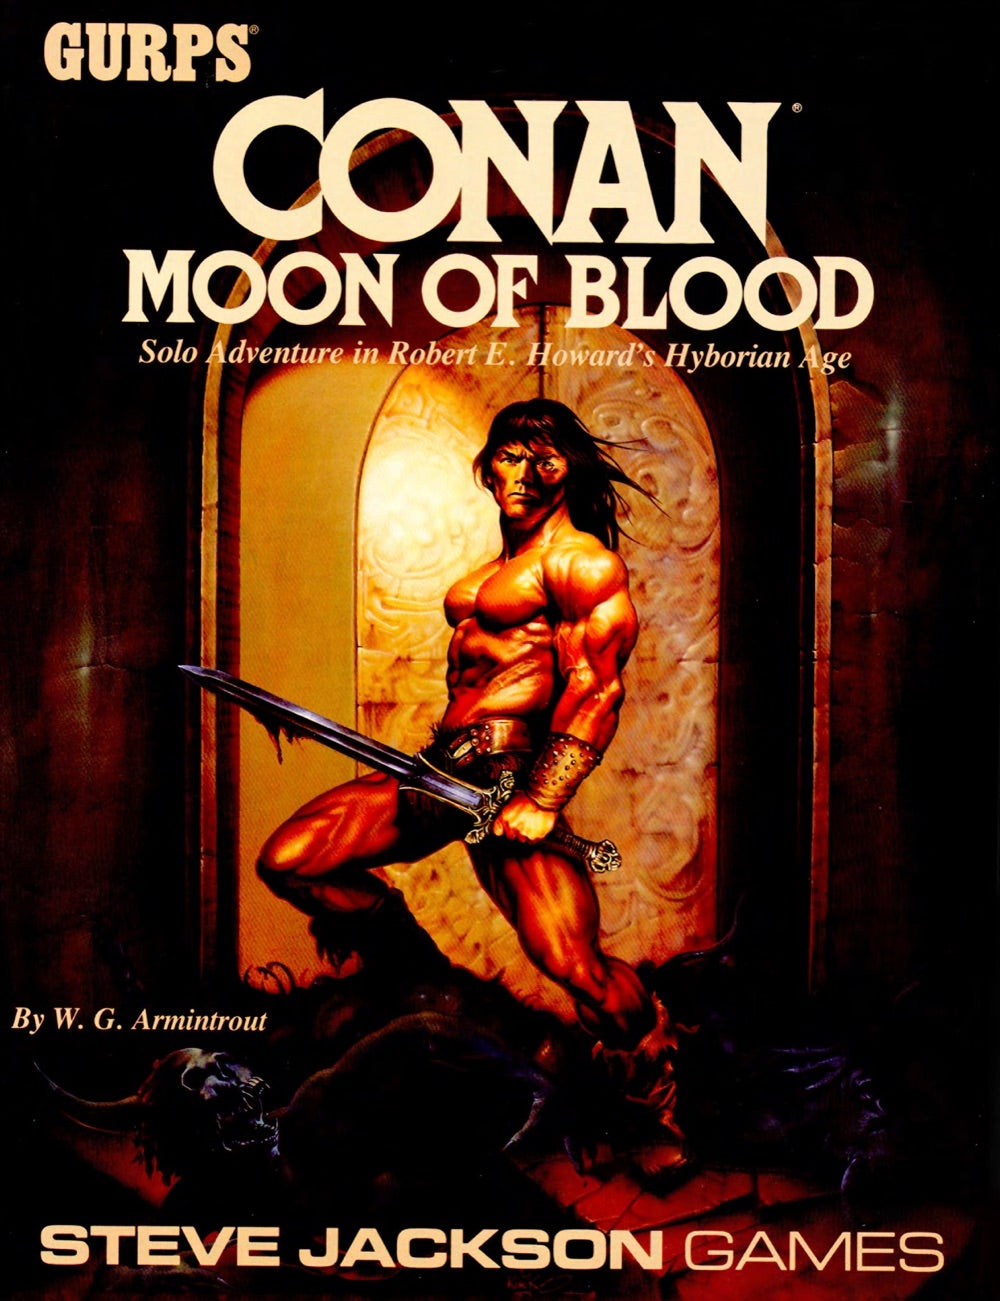 GURPS Classic: Conan – Moon of Blood